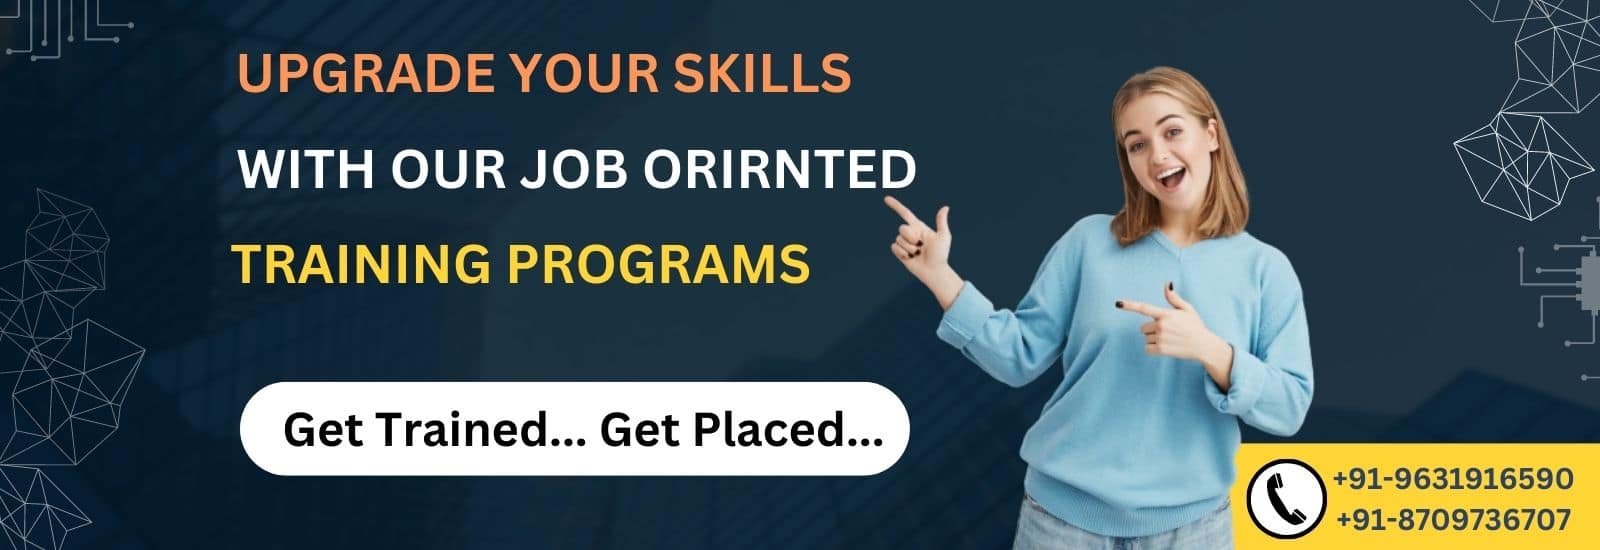 IT Job Oriented Training Program